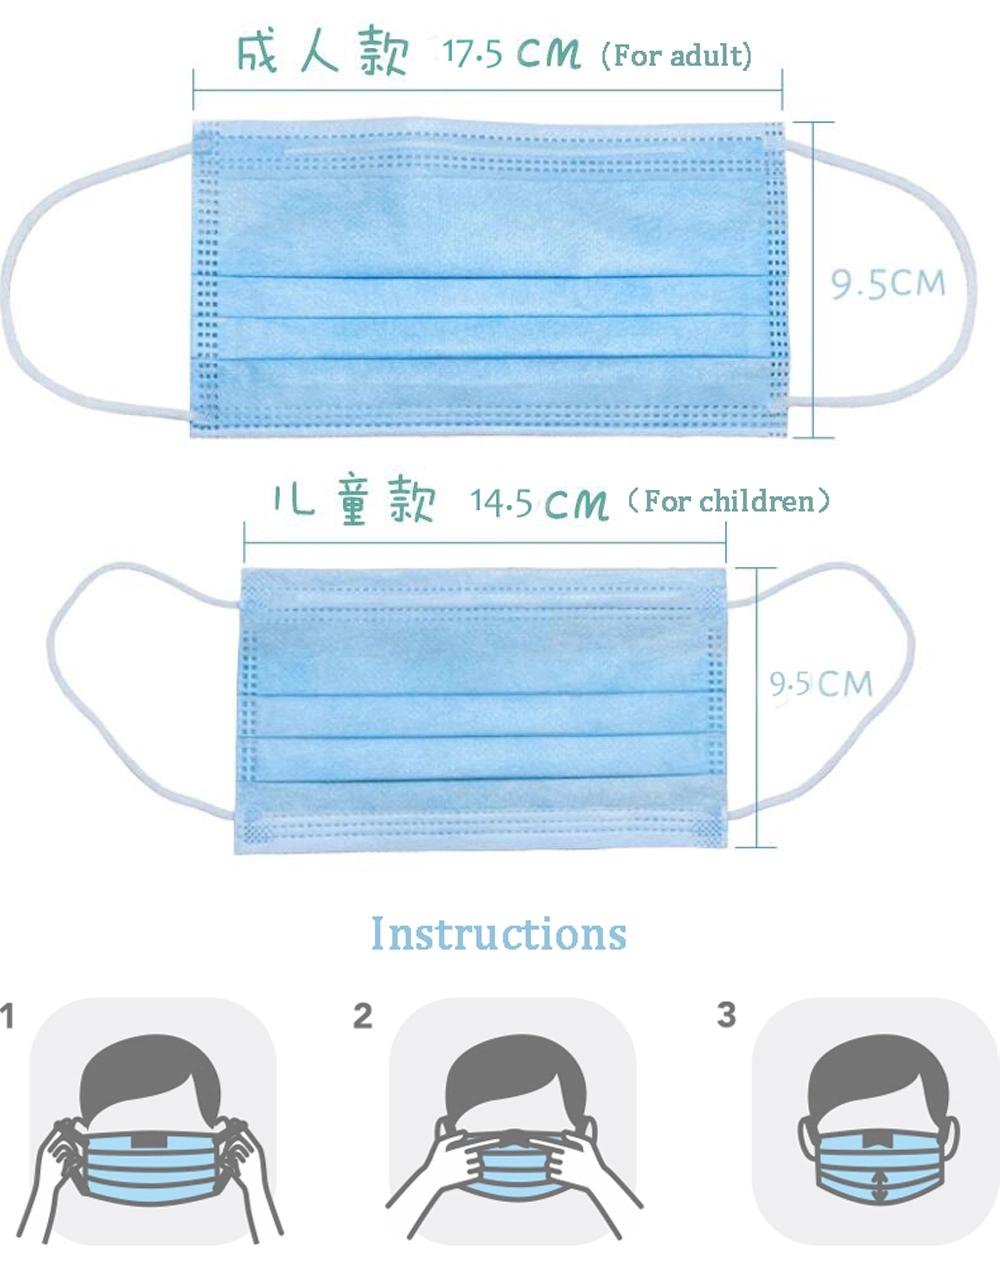 Disposable Surgical Face Masks